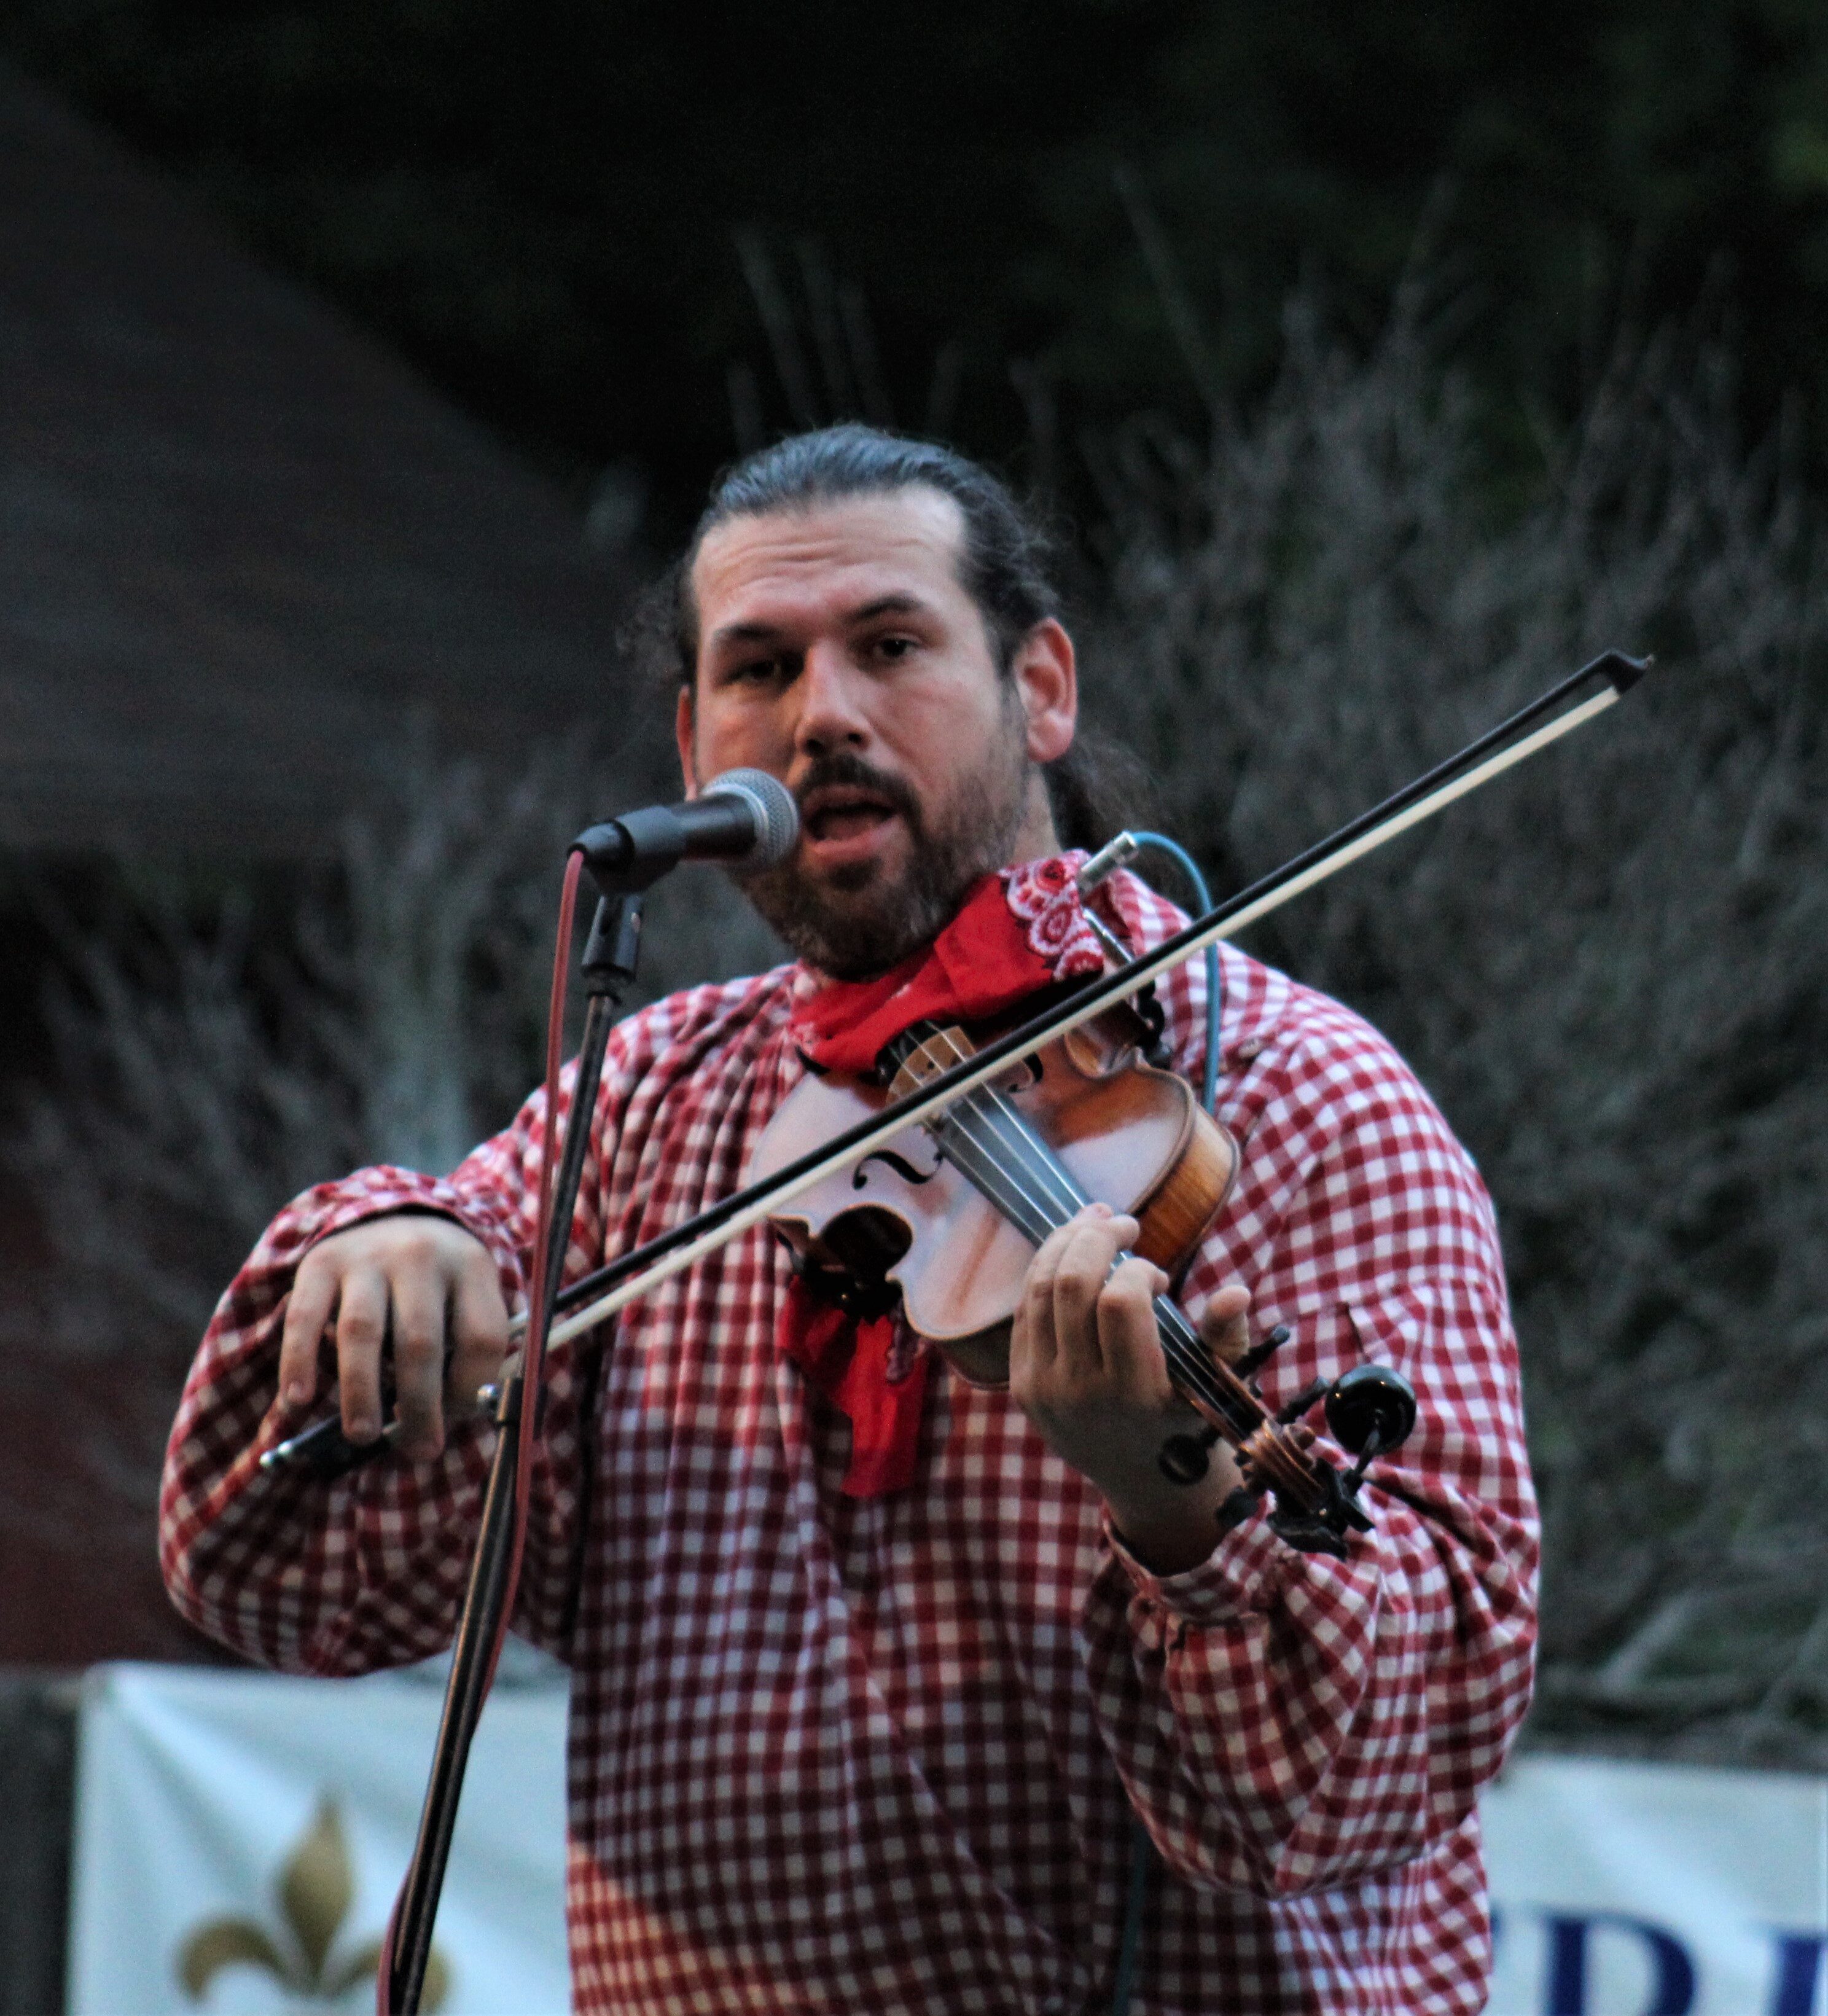 Dennis Stroughmatt on fiddle